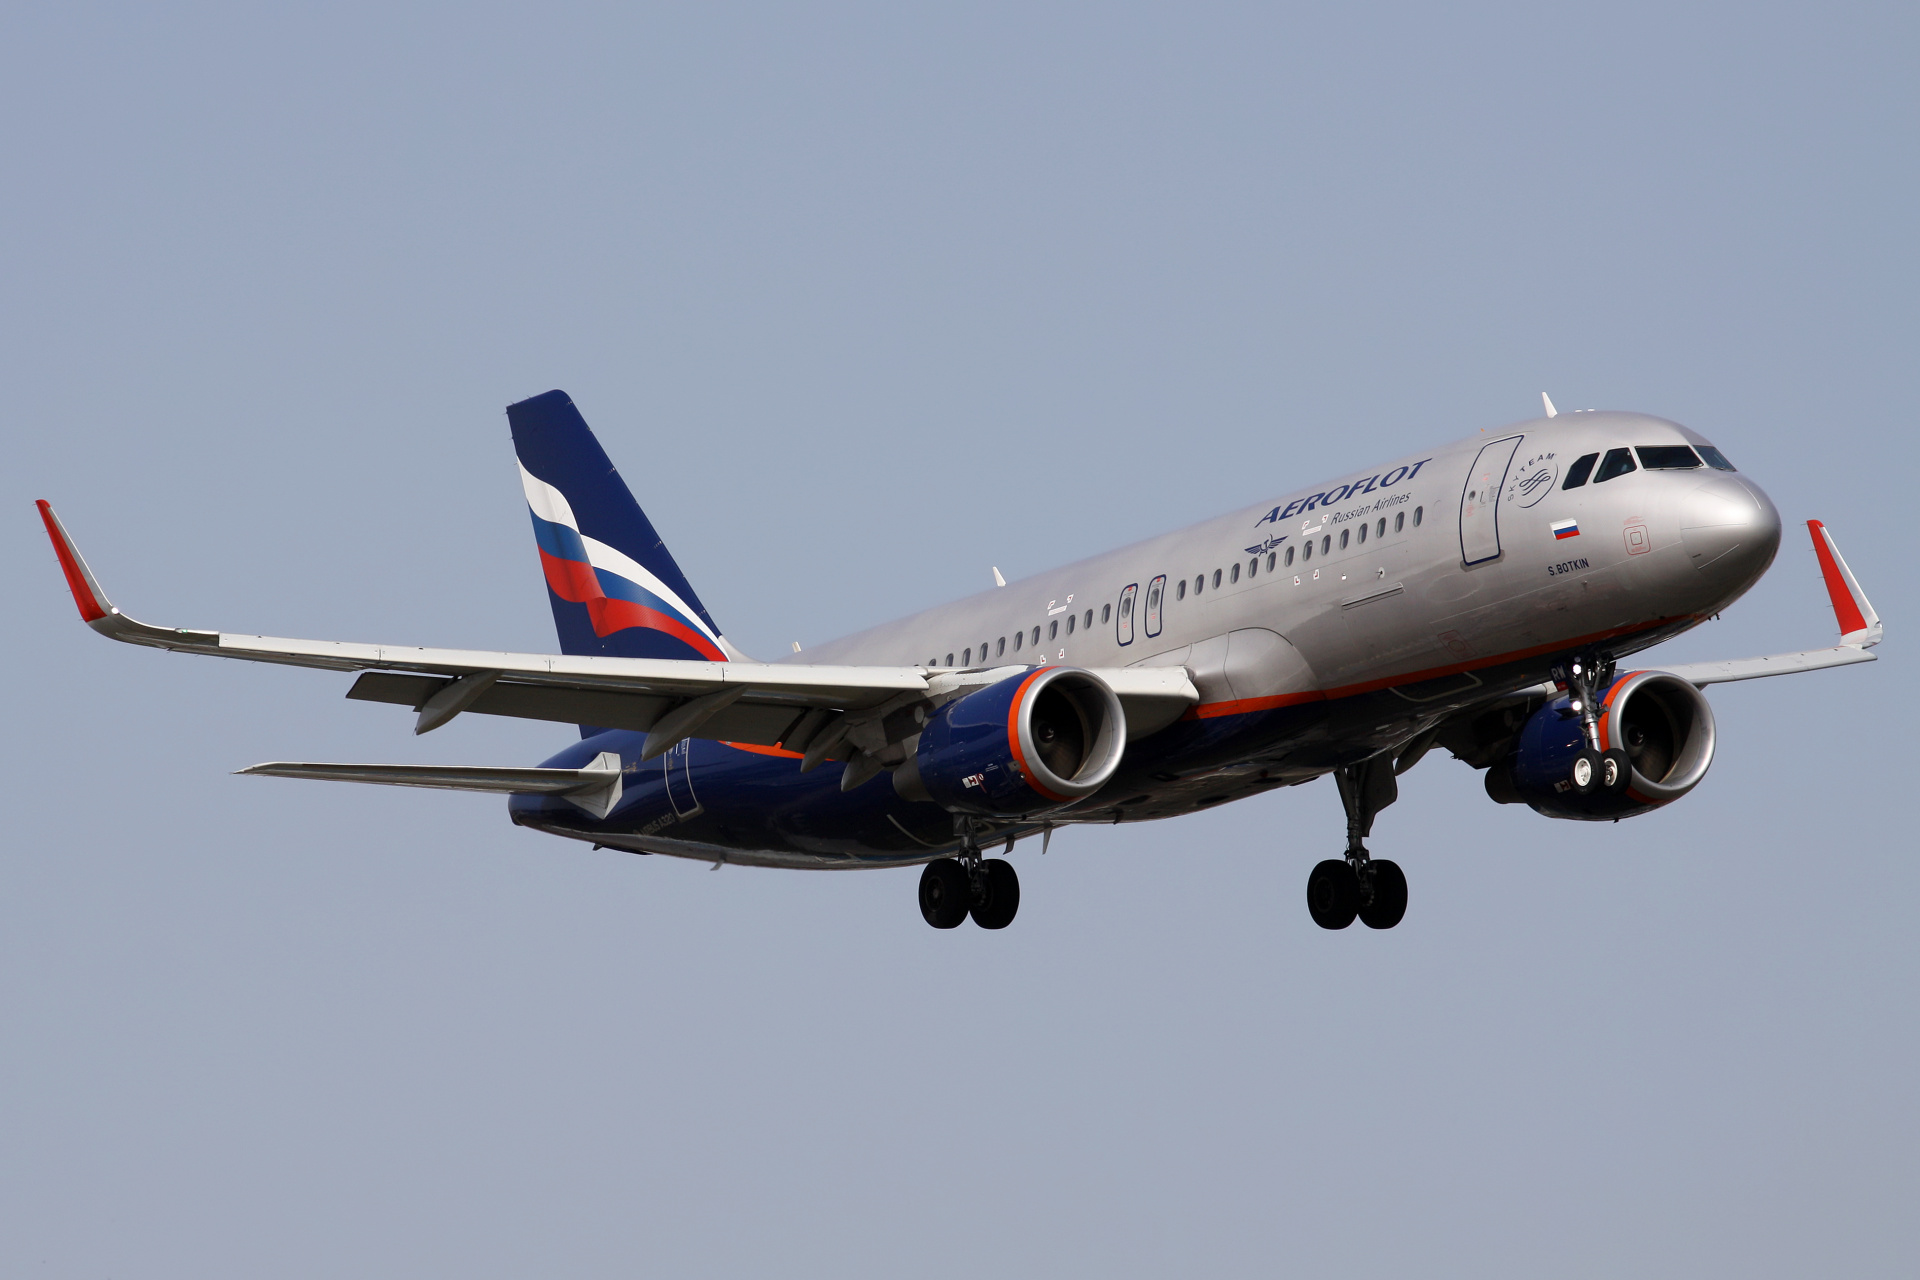 VQ-BRW (Aircraft » EPWA Spotting » Airbus A320-200 » Aeroflot Russian Airlines)